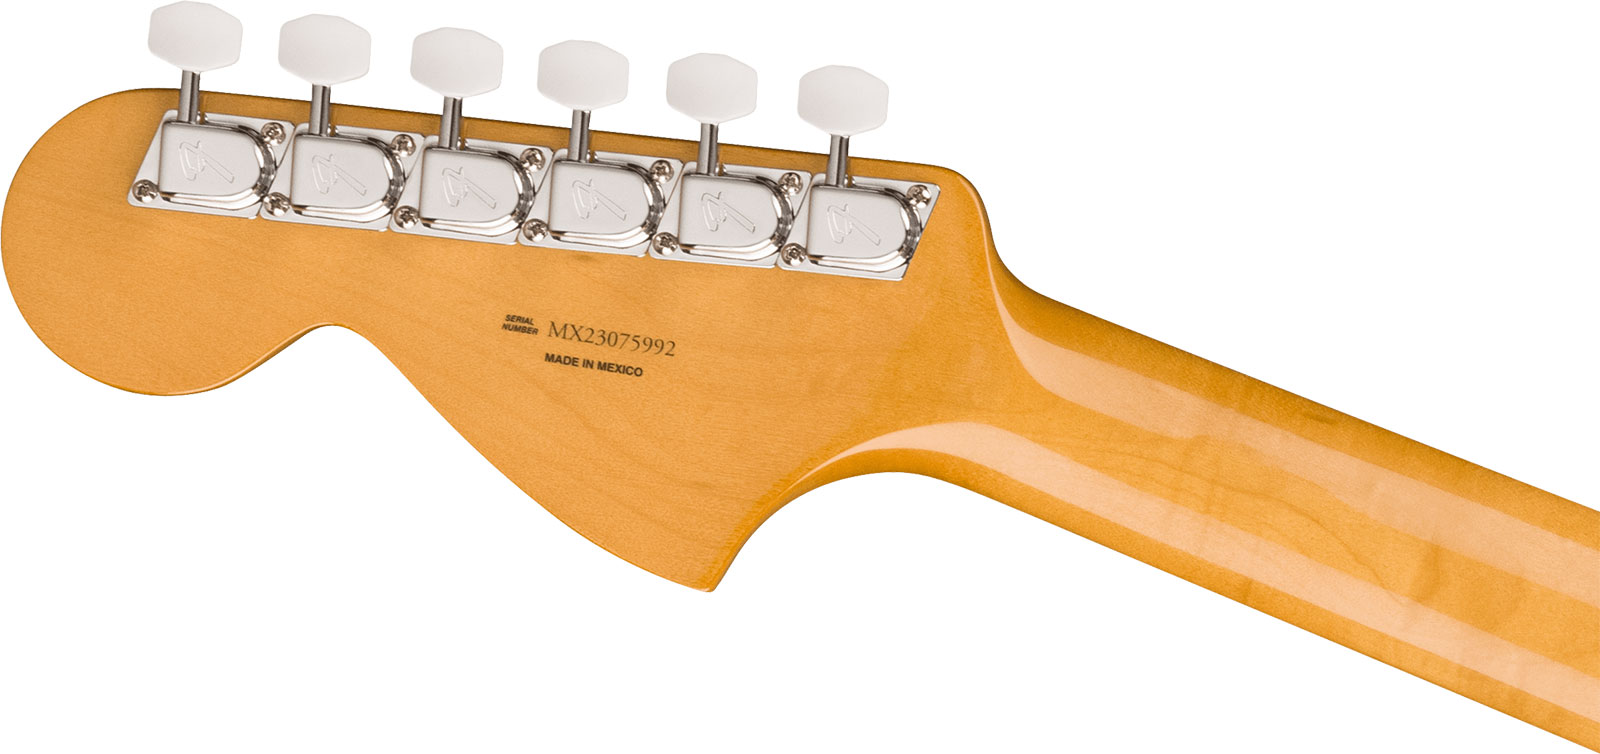 Fender Mustang 70s Competition Vintera 2 Mex 2s Trem Rw - Competition Orange - Retro-Rock-E-Gitarre - Variation 3